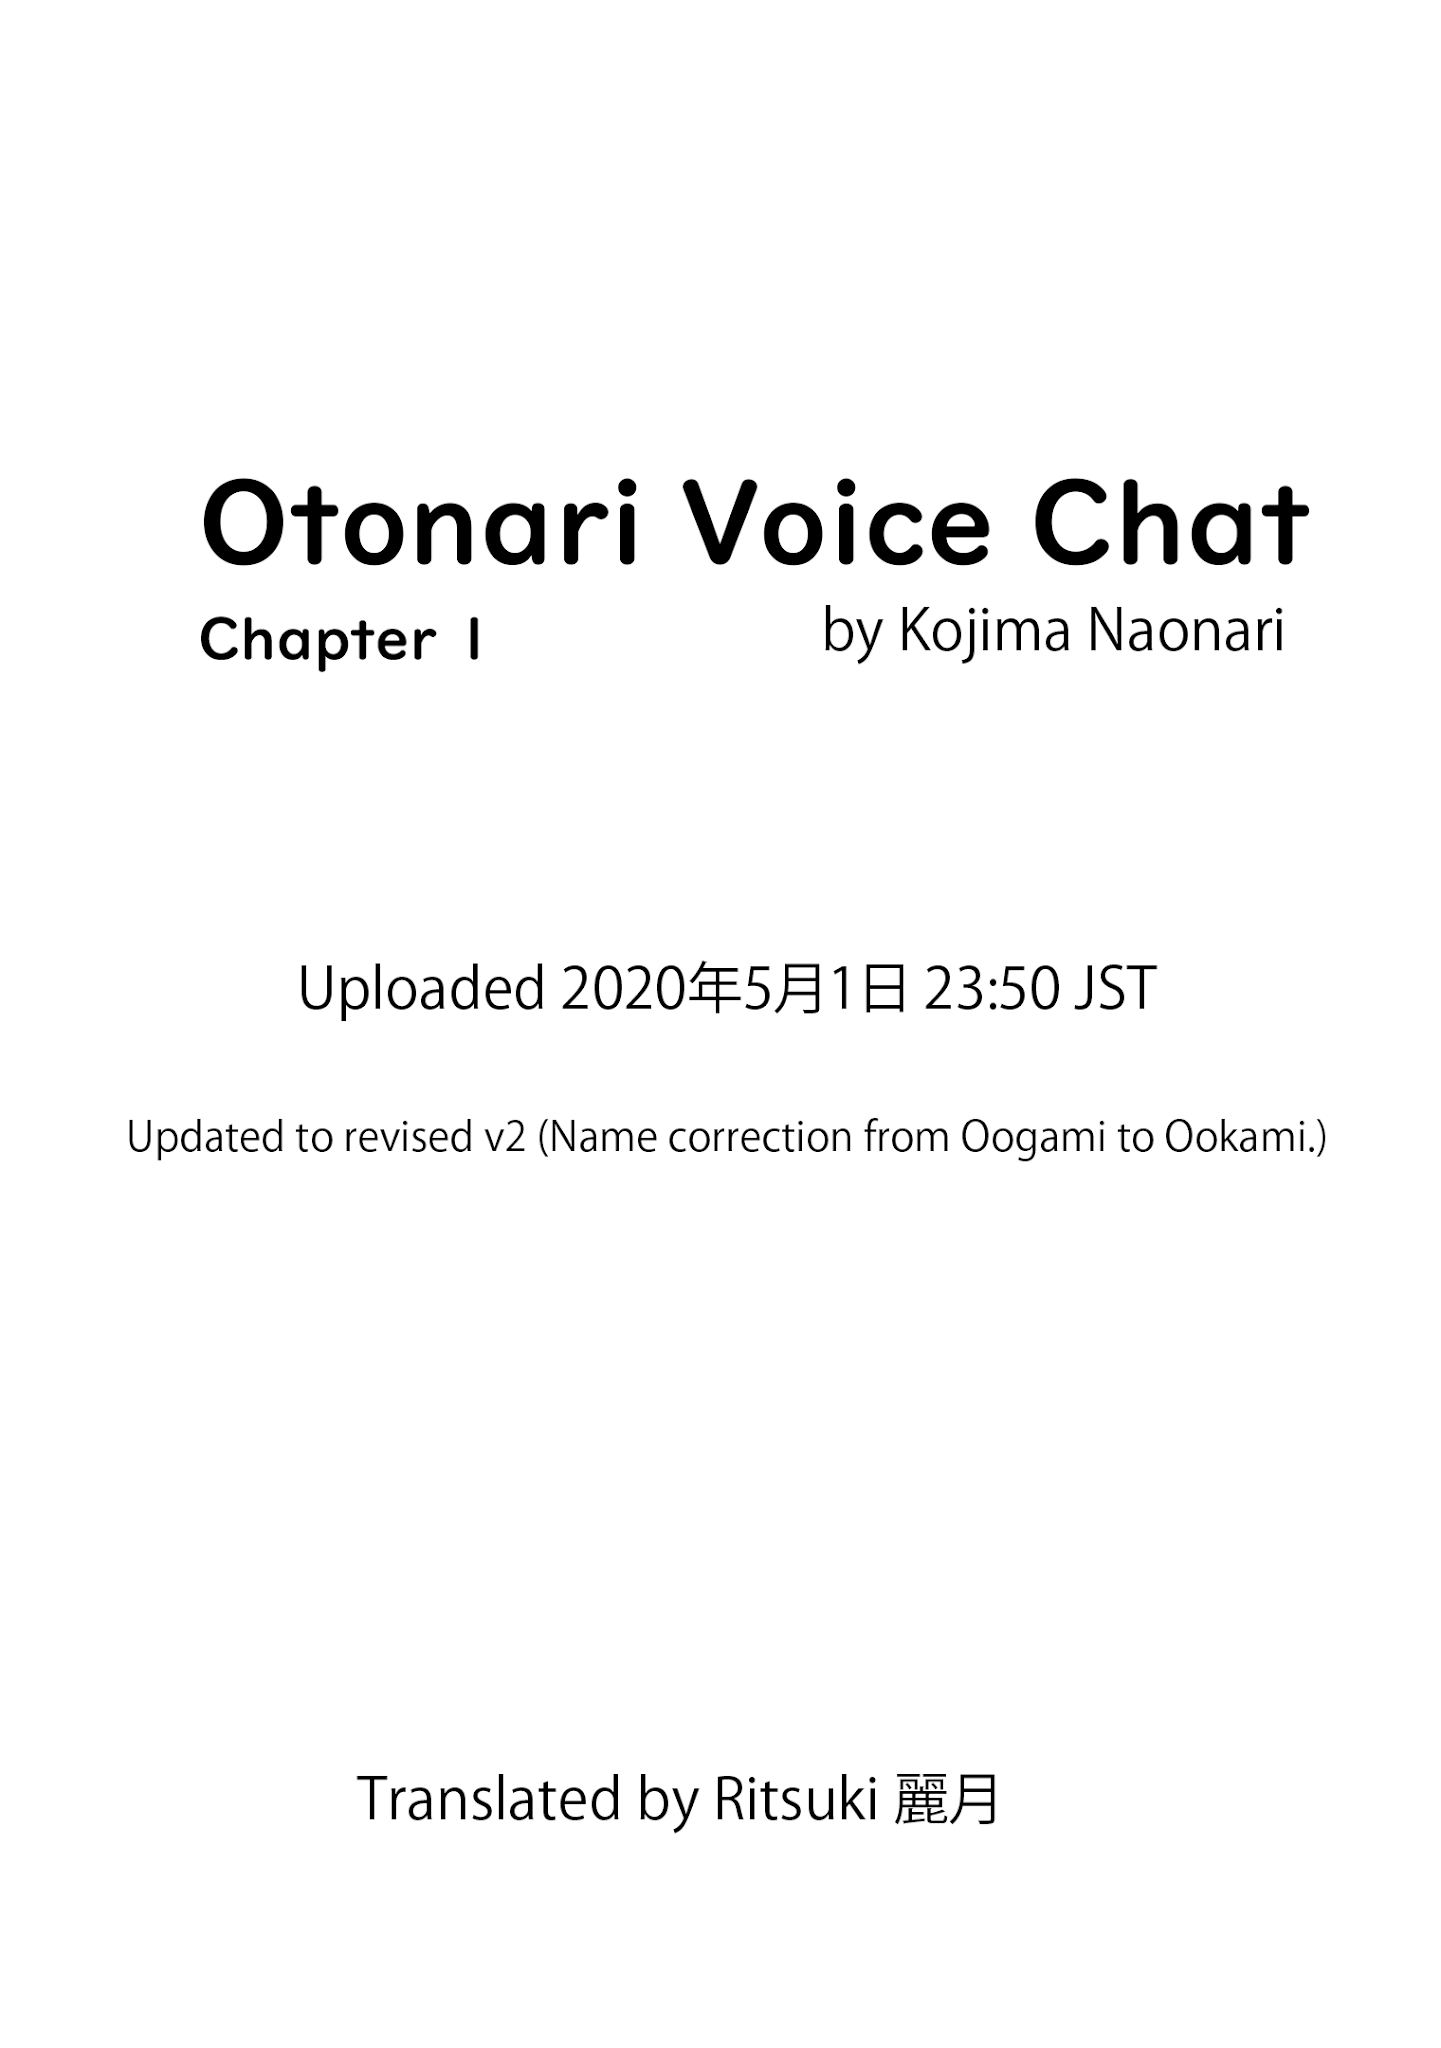 Otonari Voice Chat - Page 1